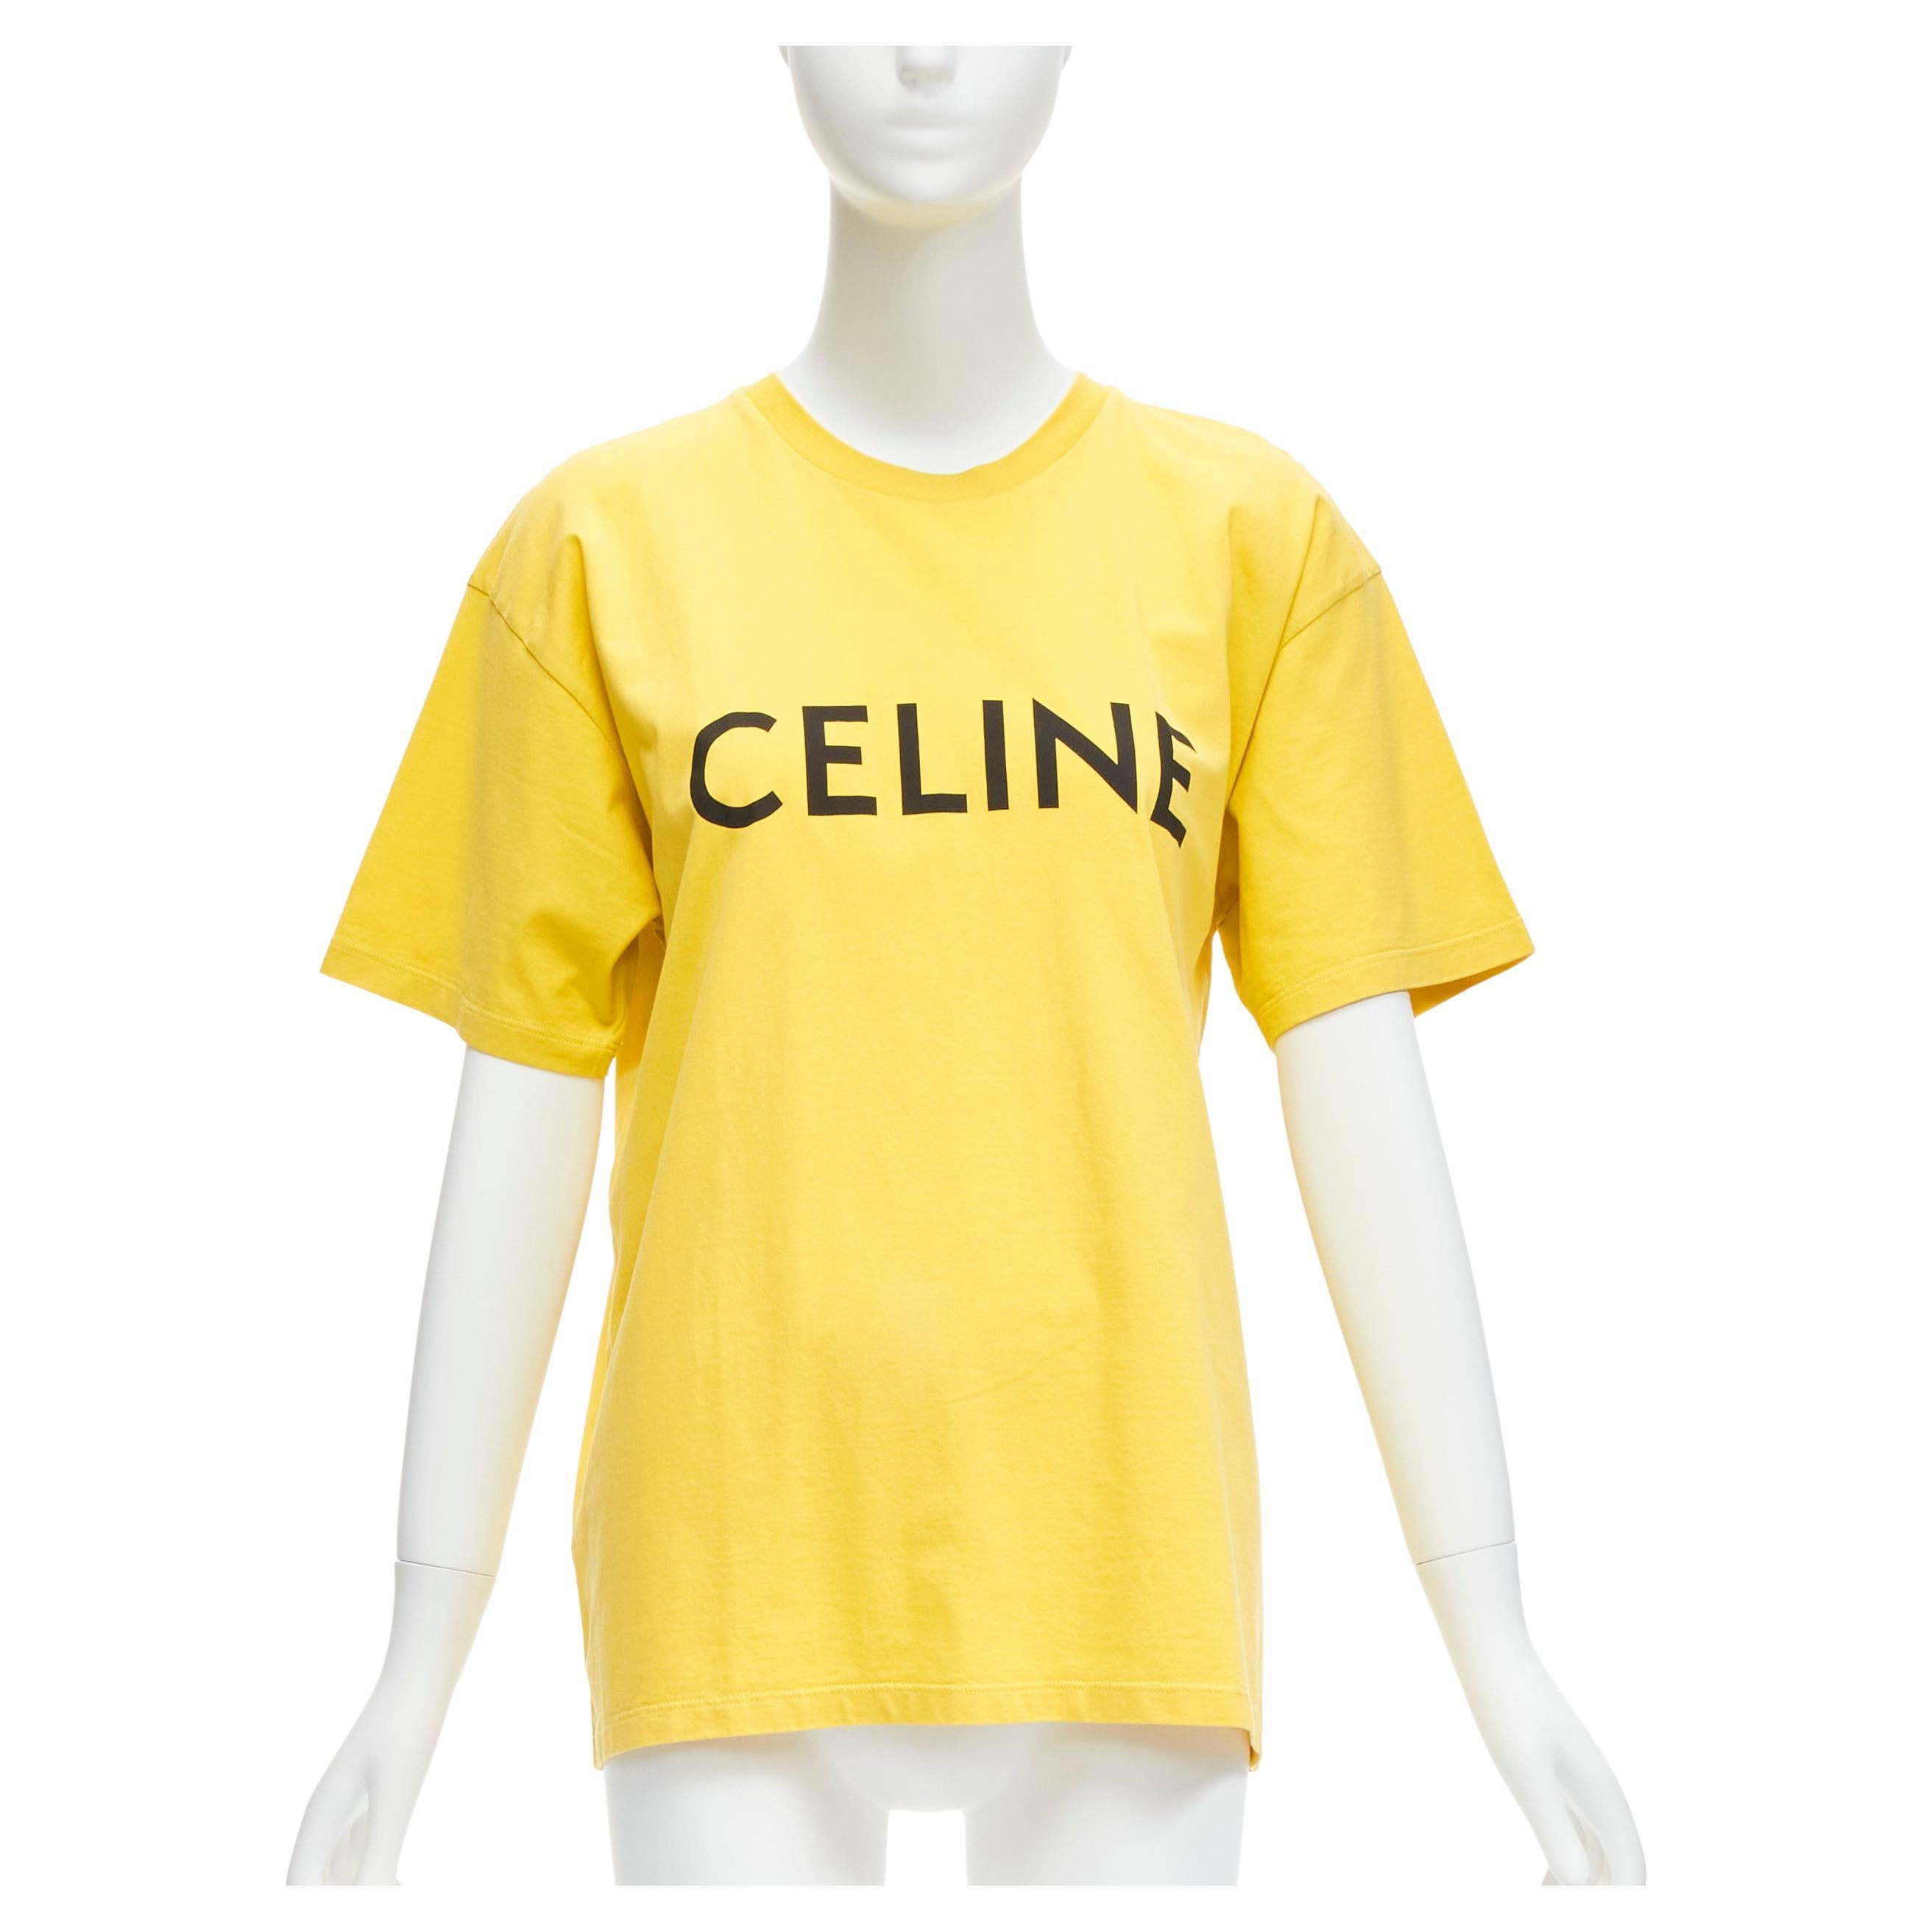 CELINE Hedi Slimane yellow black logo cotton short sleeves round neck tshirt XS For Sale